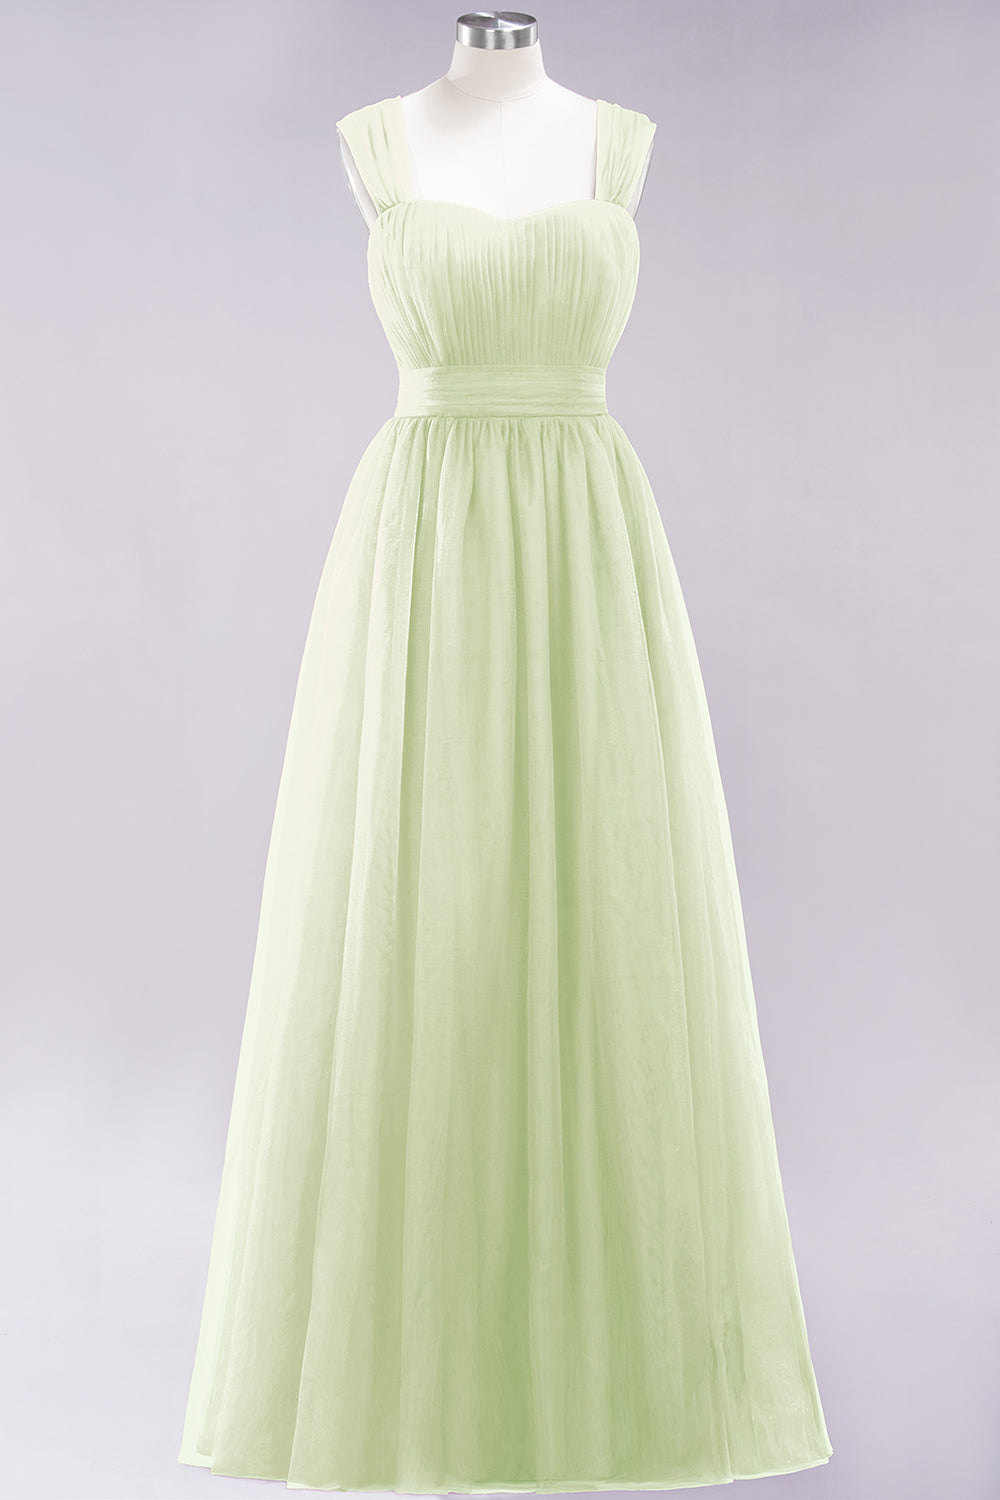 Gorgeous Sweetheart Straps Ruffle Burgundy Bridesmaid Dresses Online-27dress